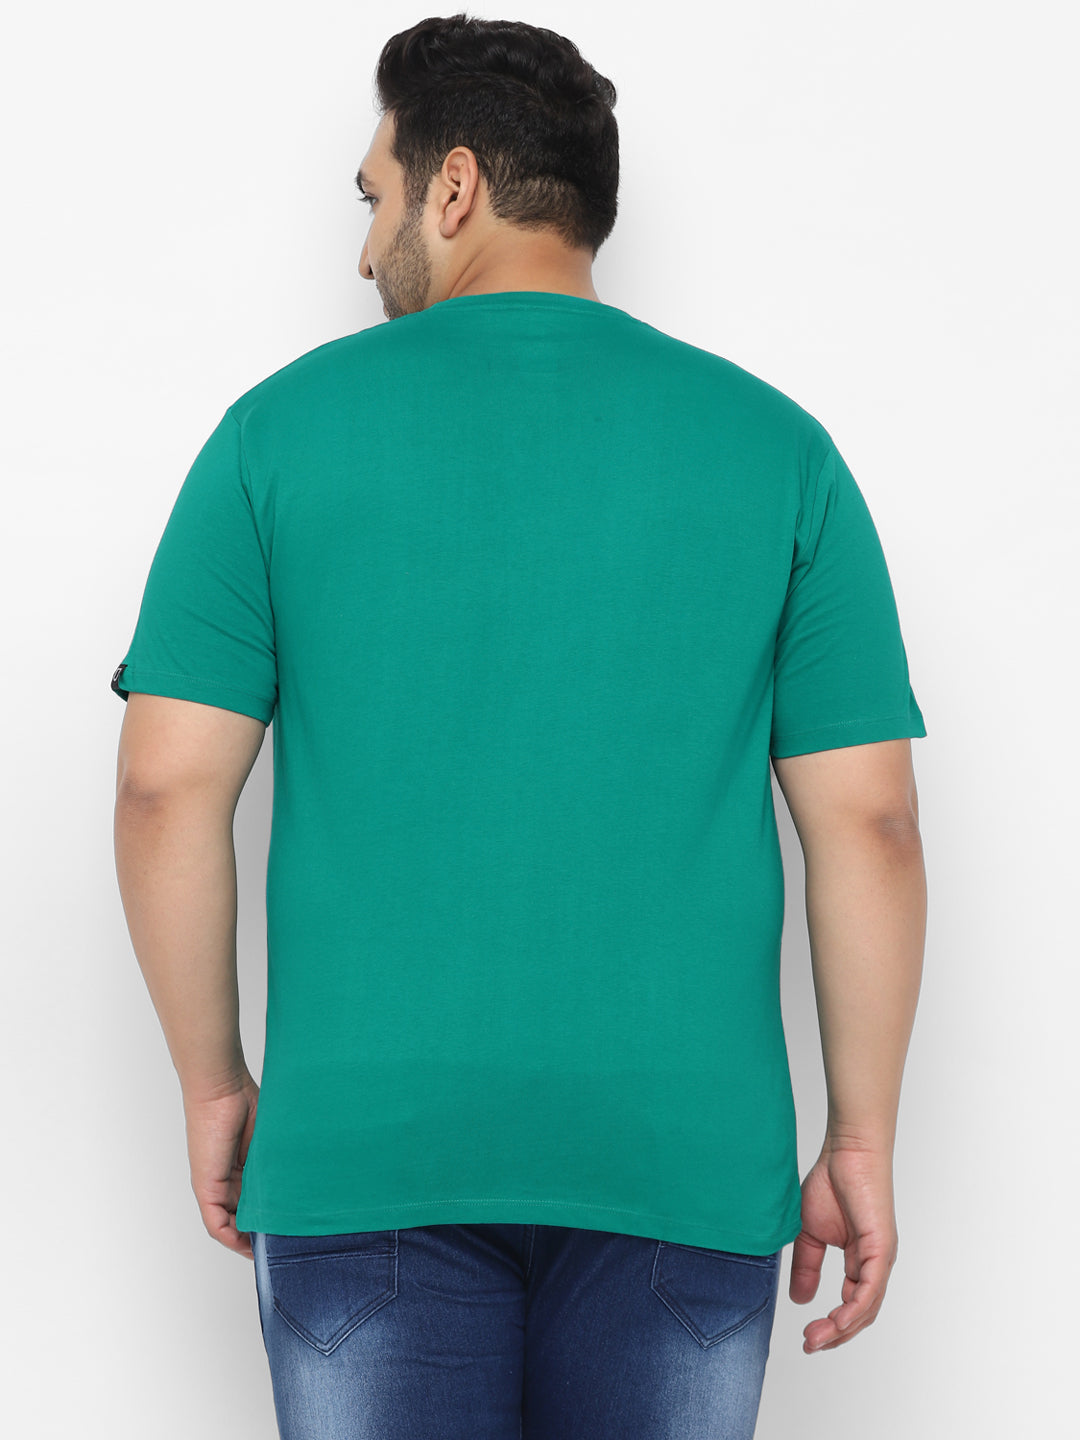 Plus Men's Teal Green Solid Regular Fit Round Neck Cotton T-Shirt